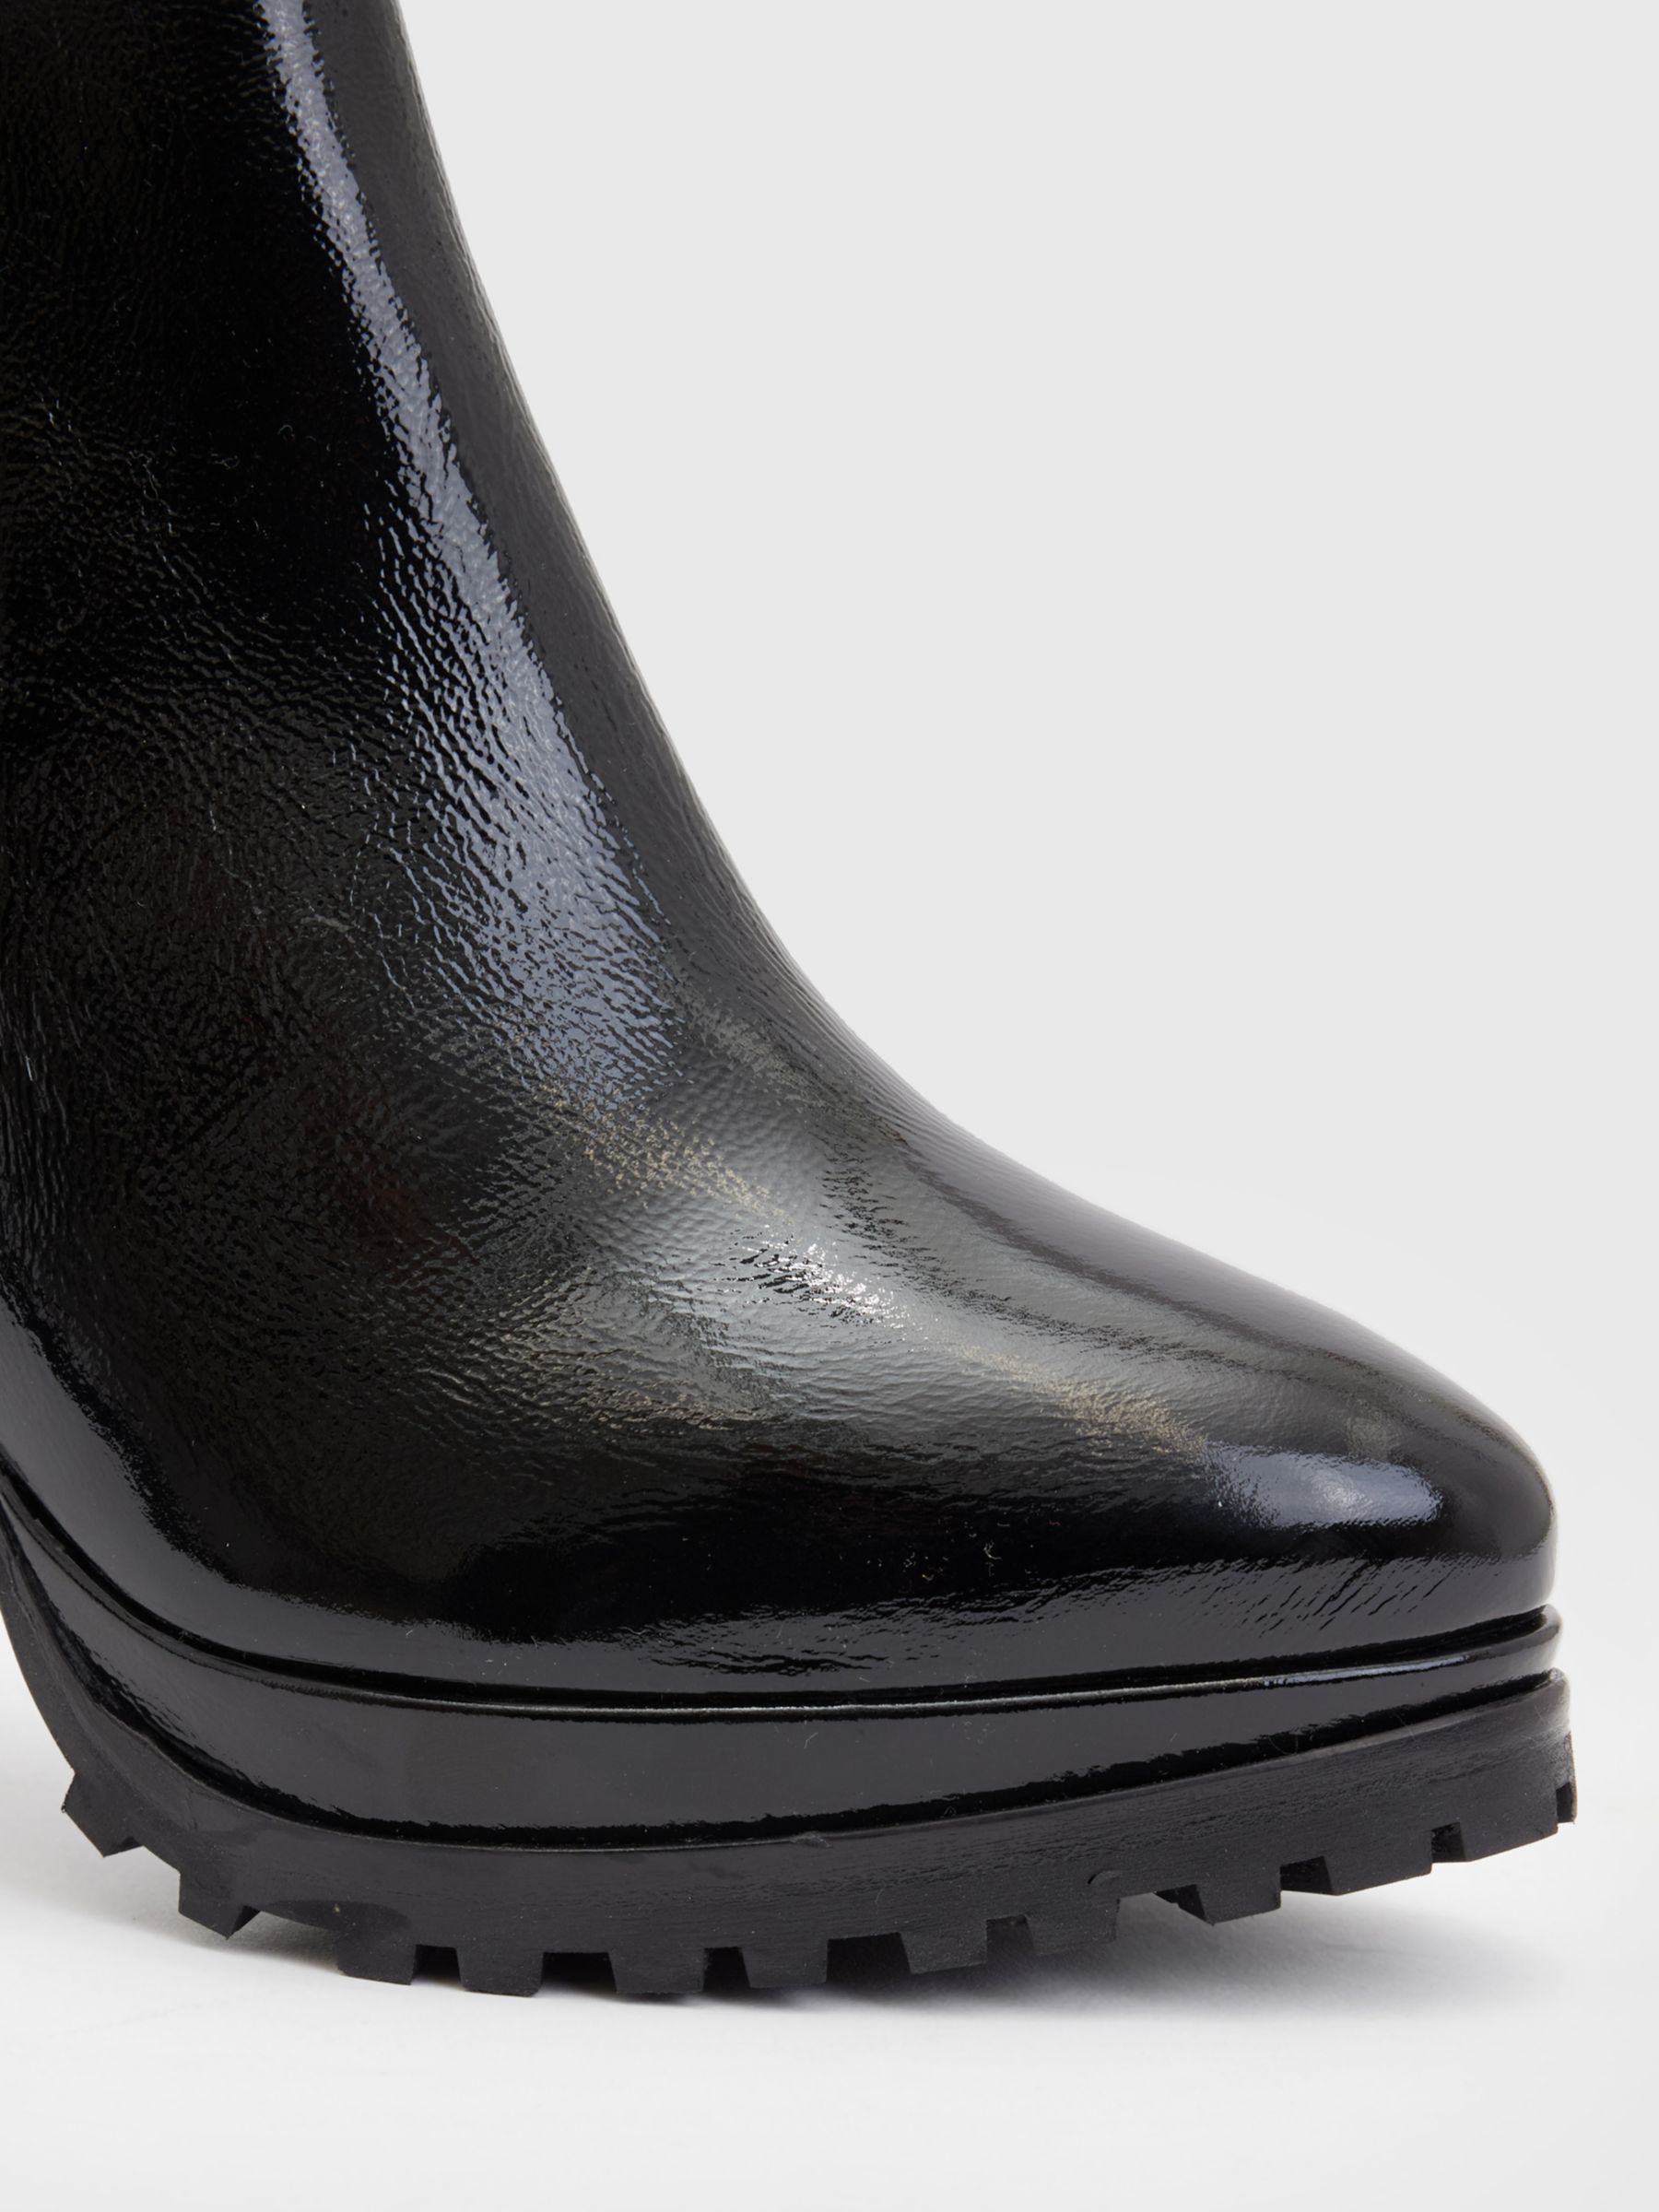 AllSaints Sarris Patent Leather Boots, Black at John Lewis & Partners